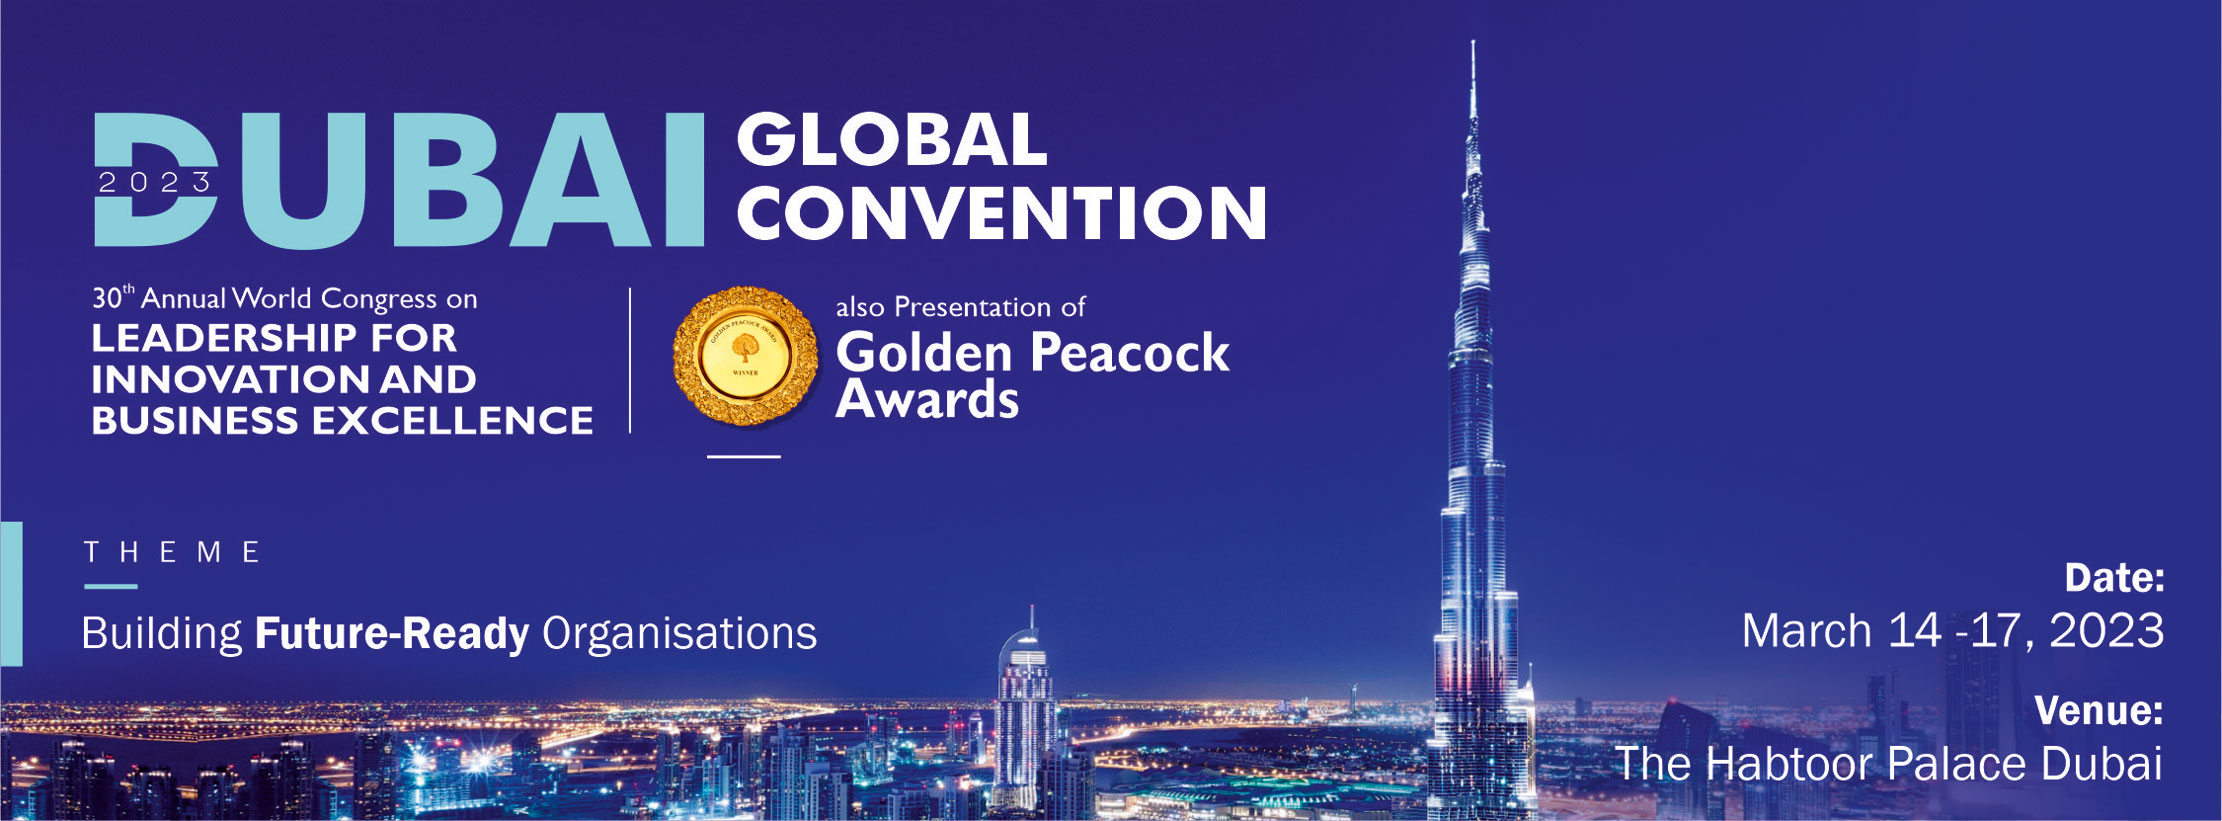 2023 - Dubai Global Convention